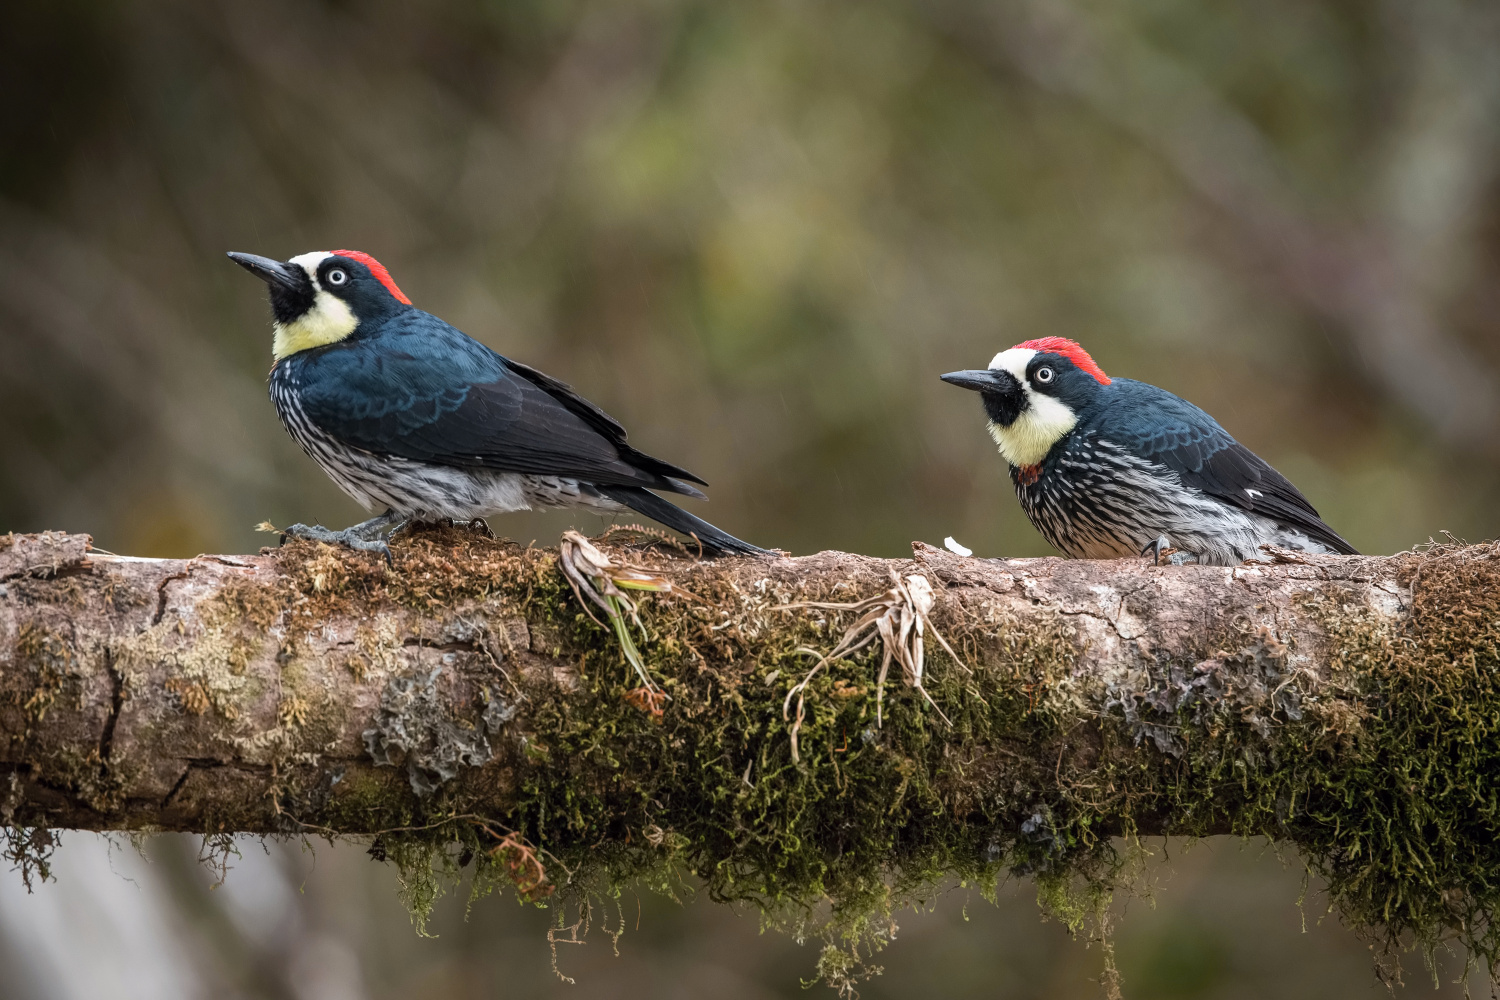 datel sběrač (Melanerpes formicivorus) Acorn woodpecker